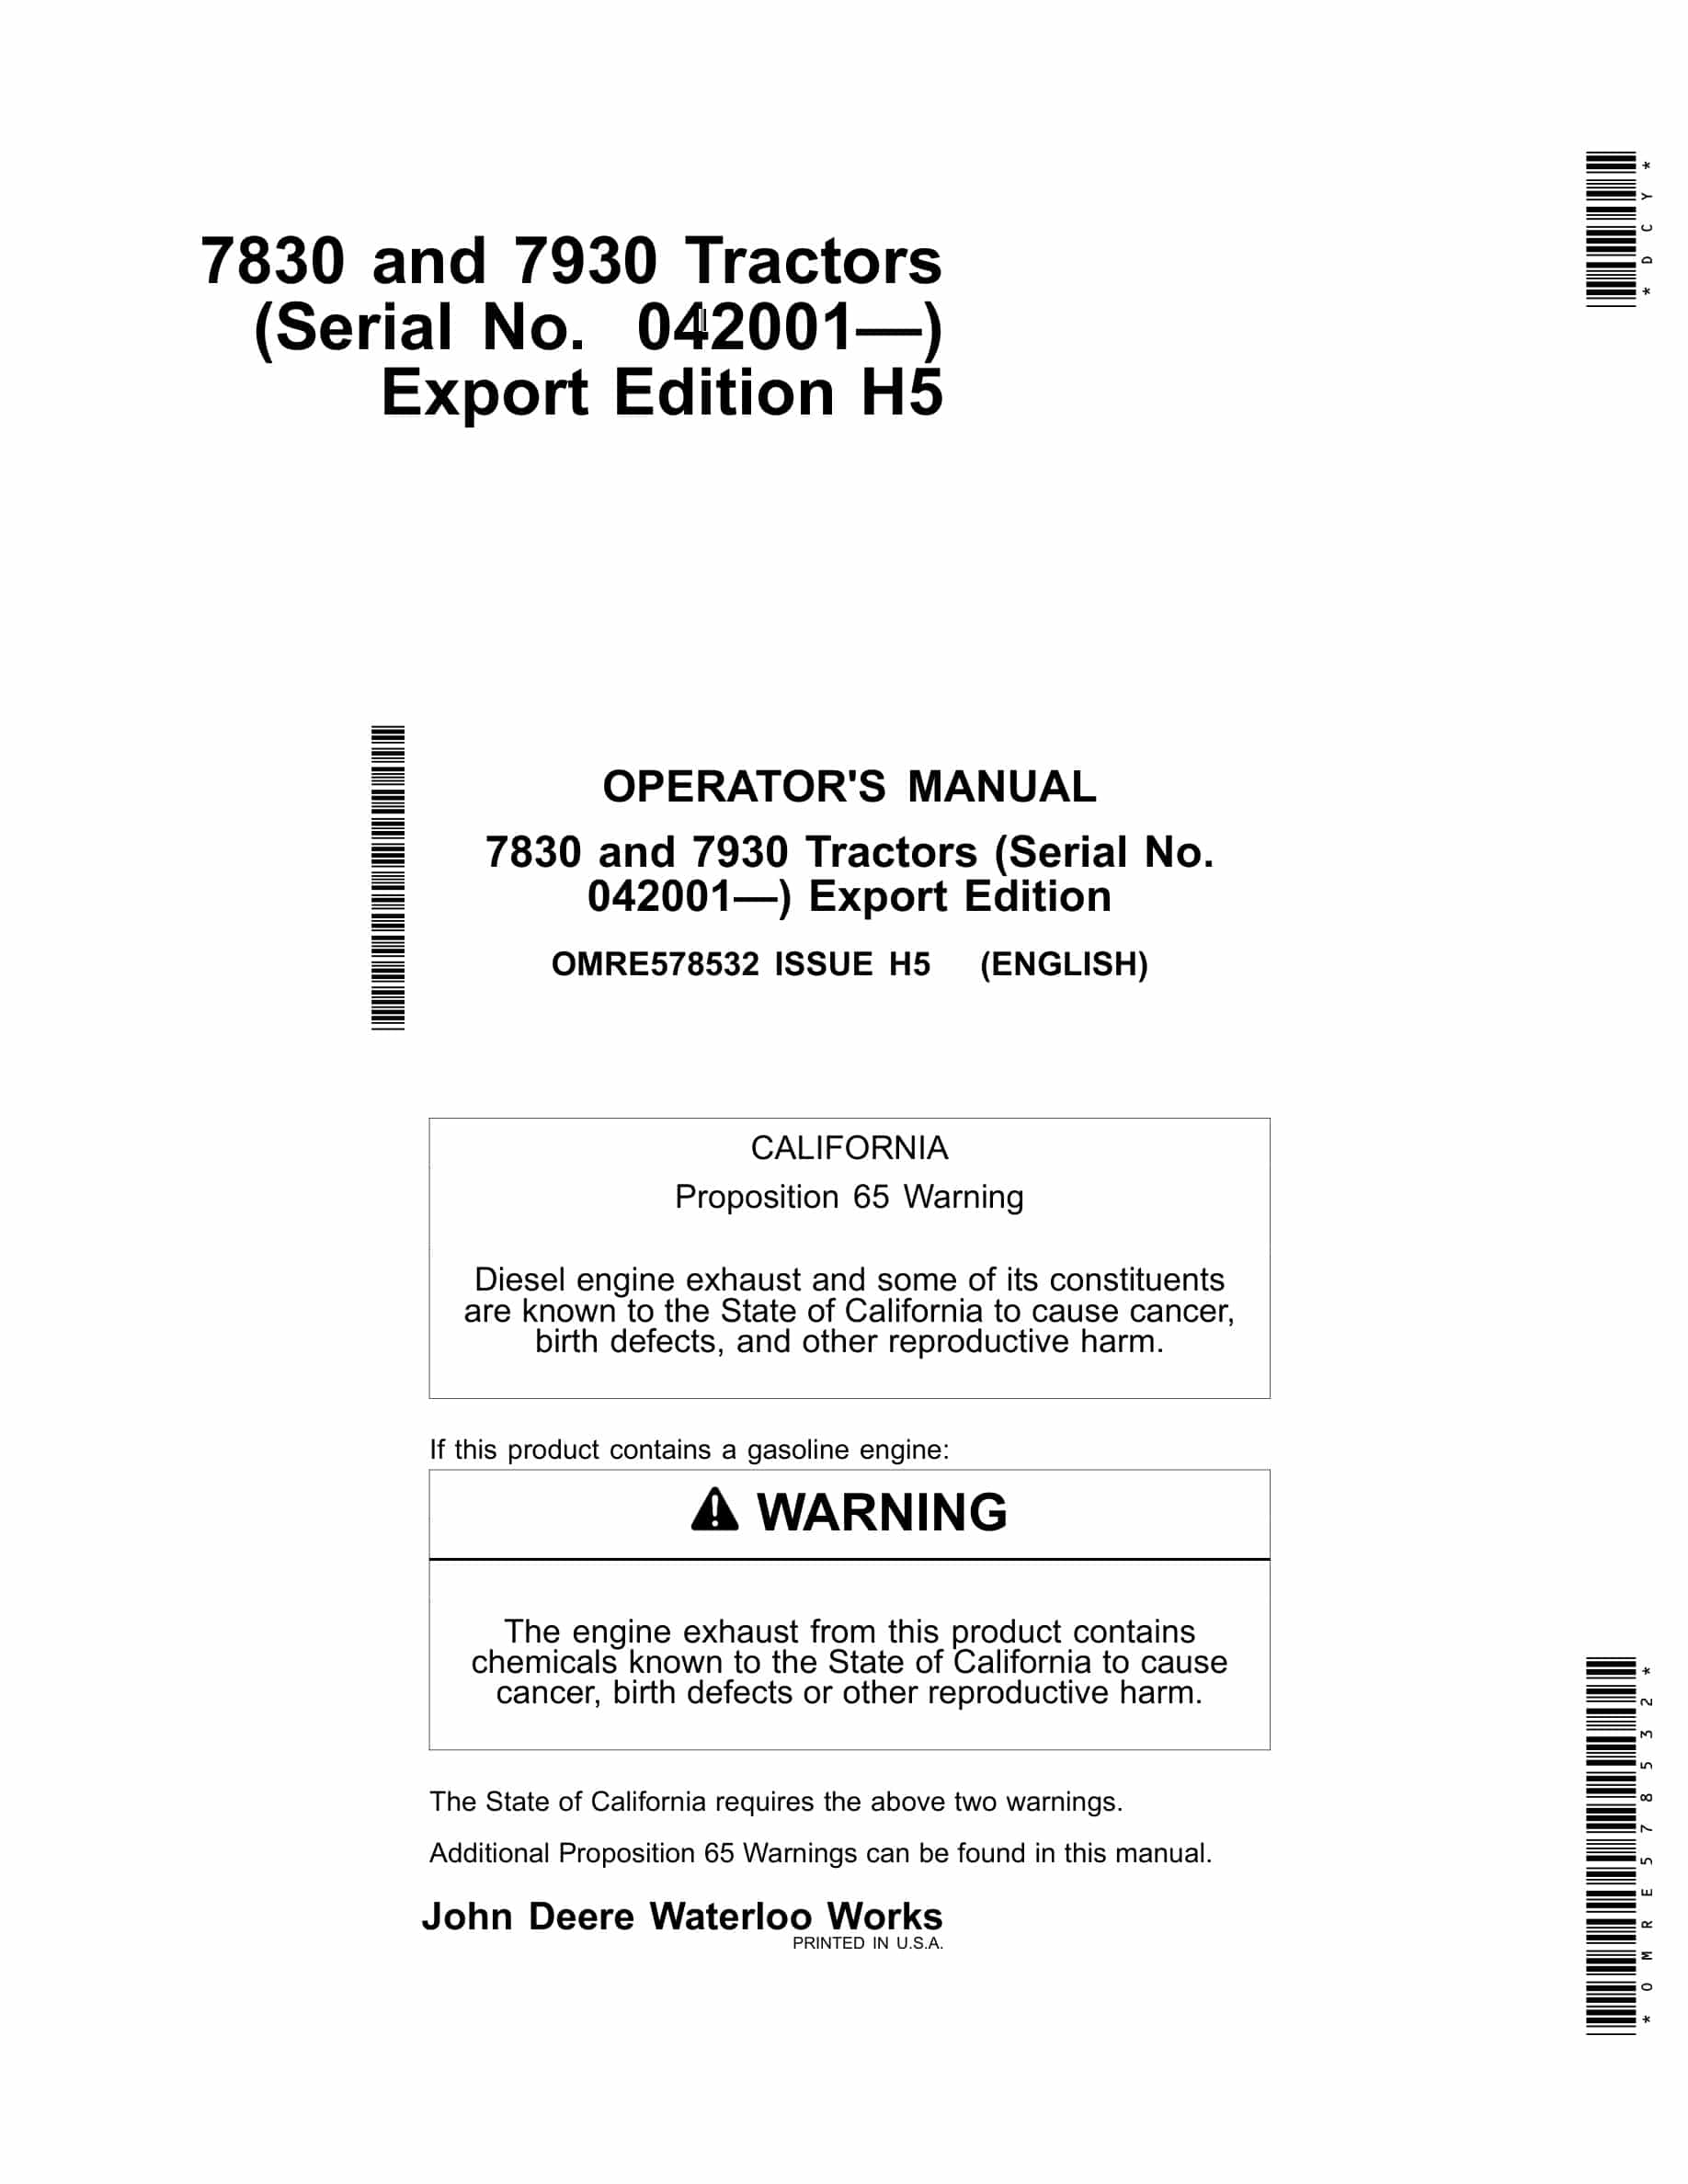 John Deere 7830 And 7930 Tractors Operator Manuals OMRE578532-1